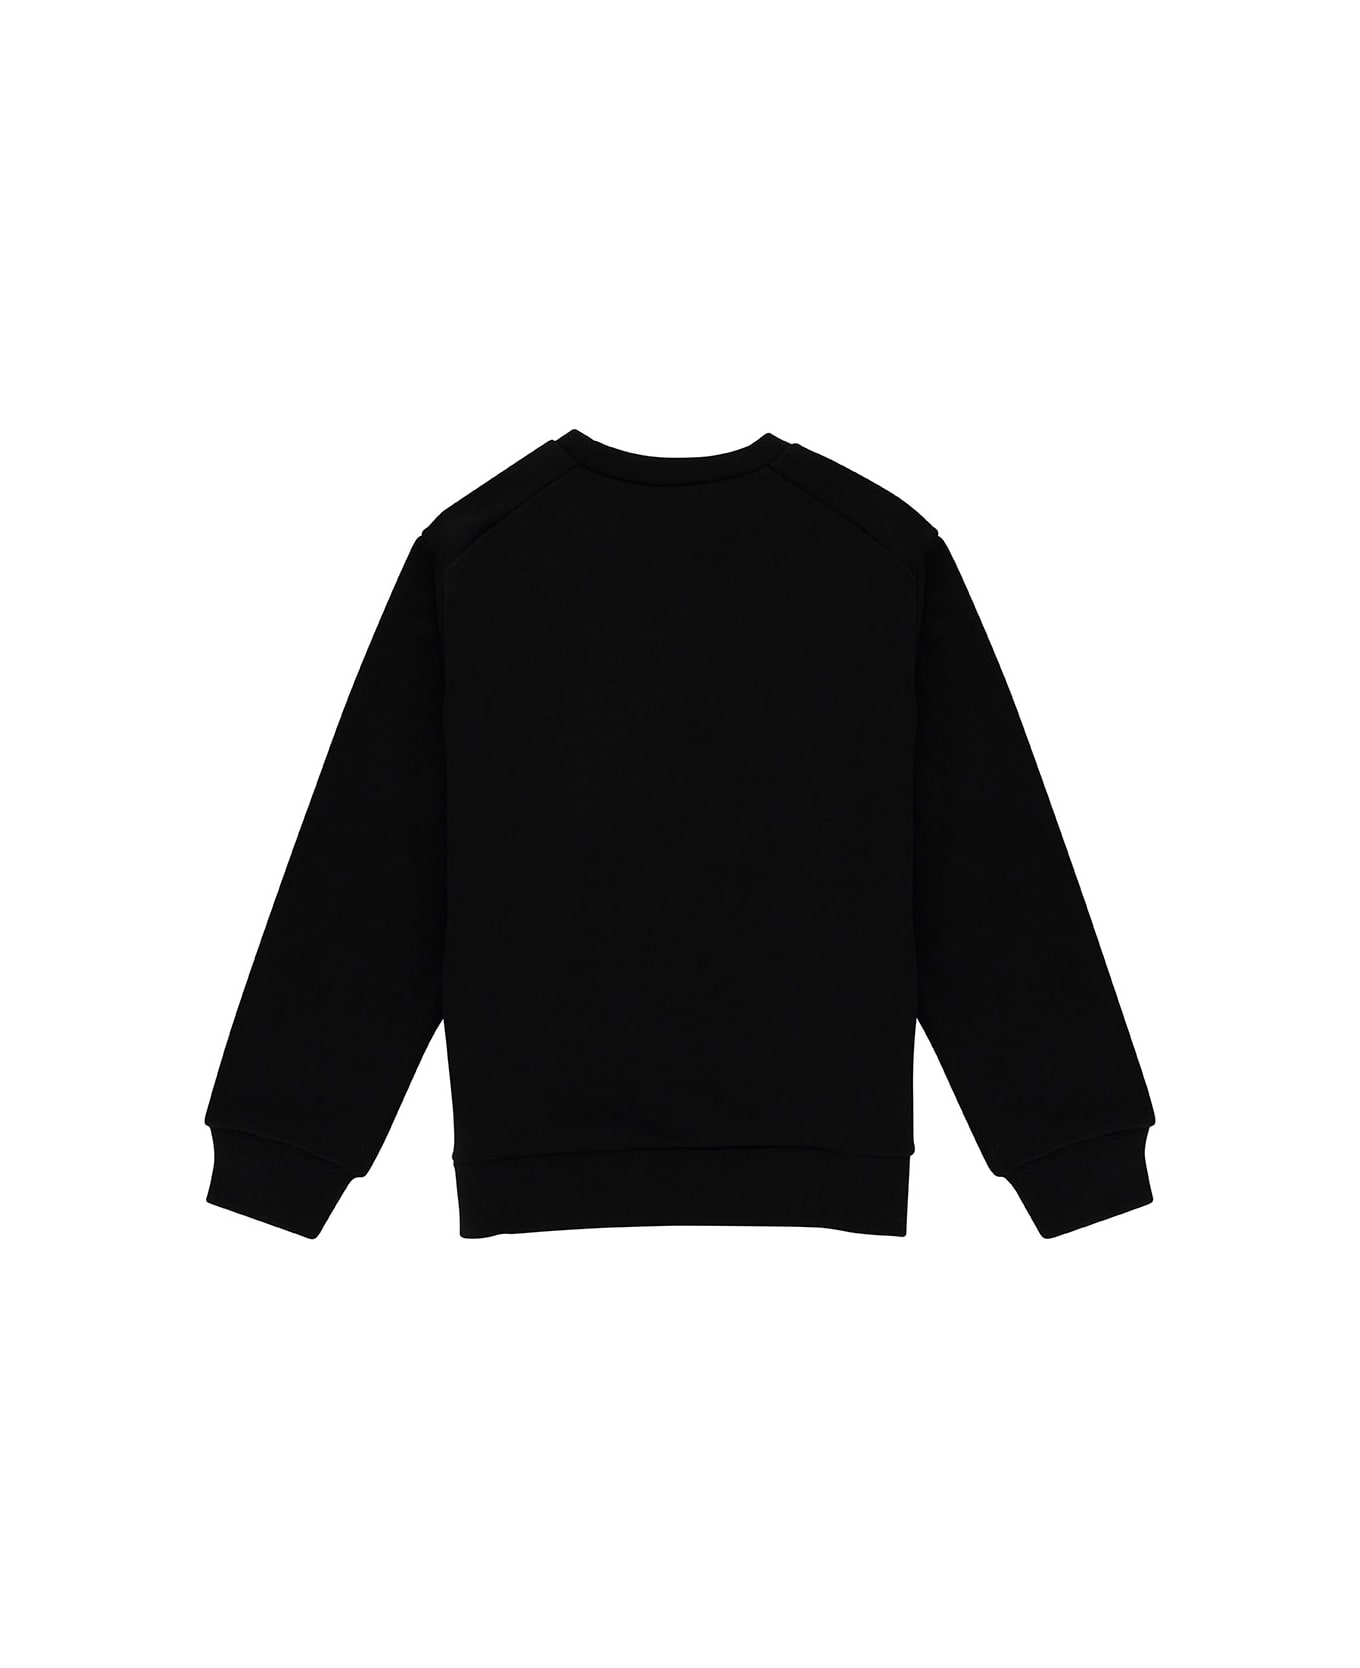 Marni Black Crewneck Sweatshirt With Contrasting Logo Print In Cotton Boy - Black